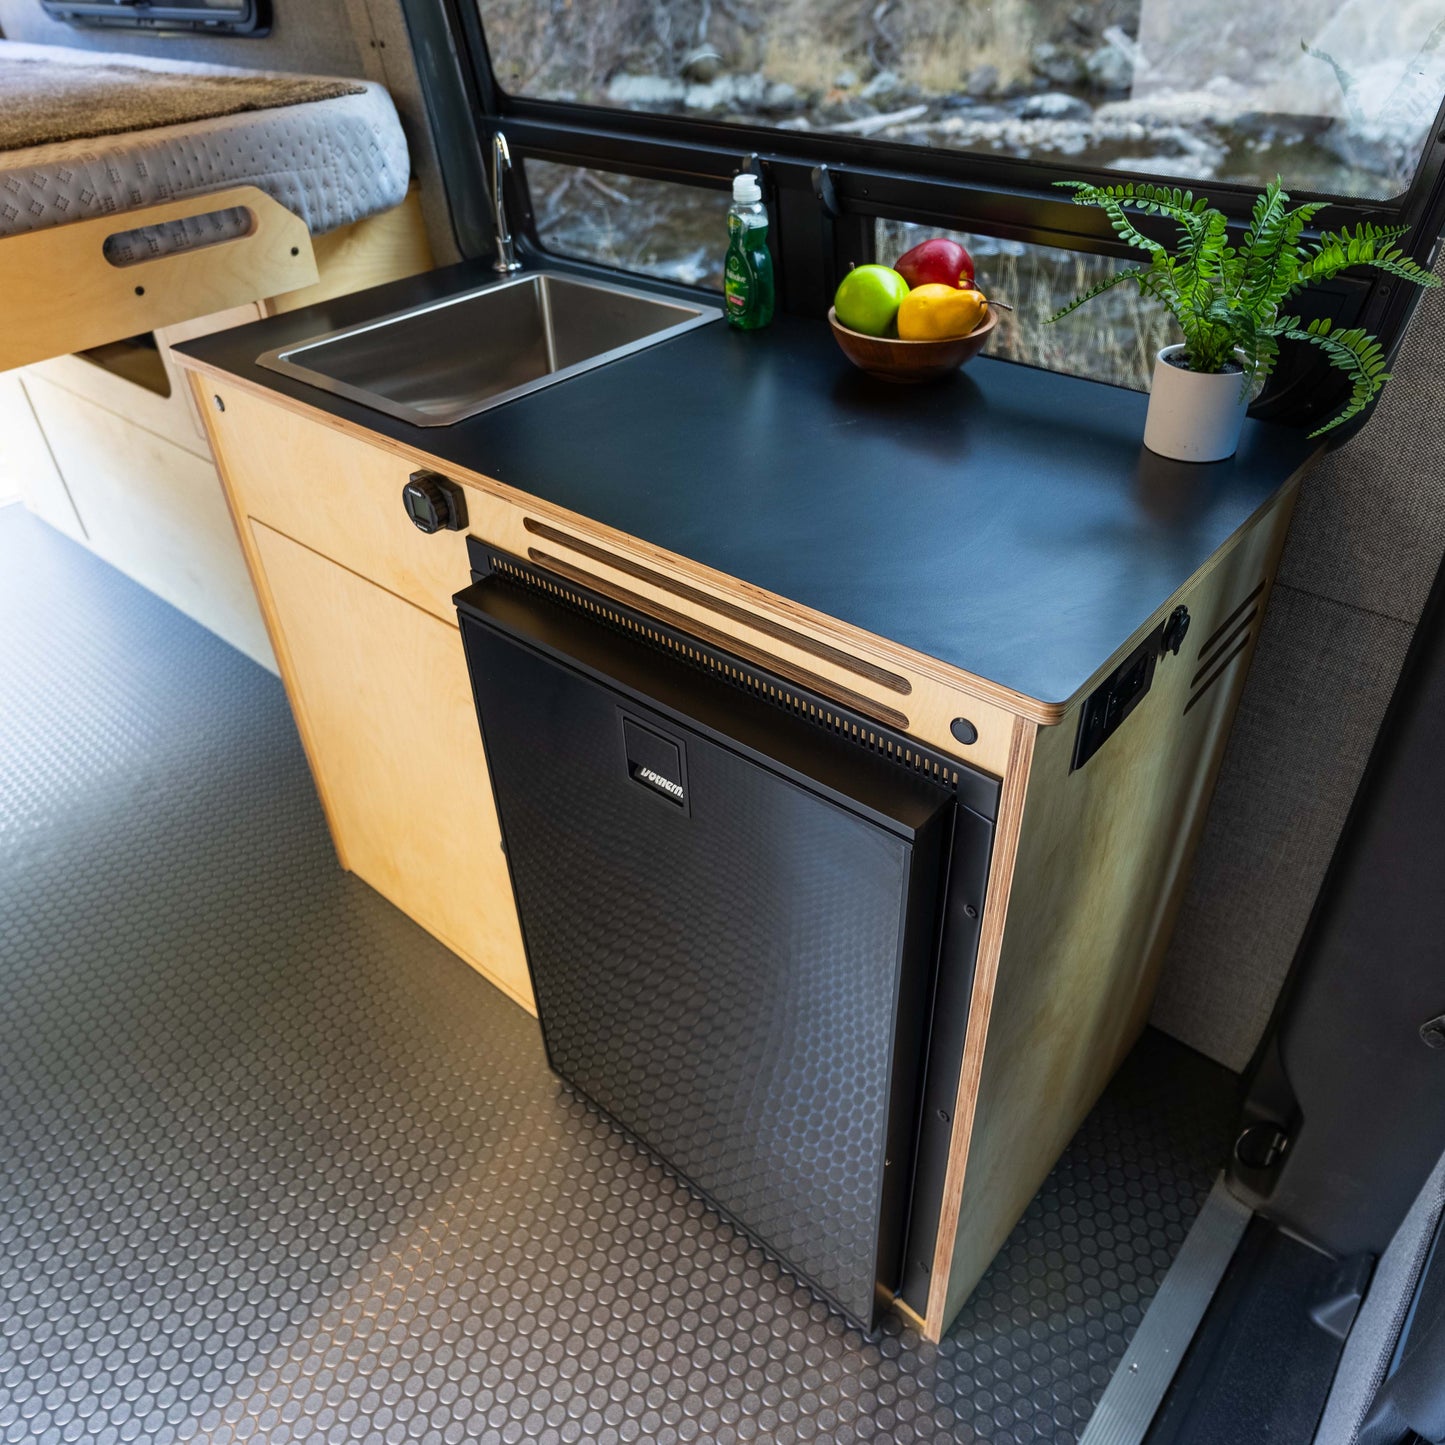 DIY Kitchen Galley Kit for Transit Vans